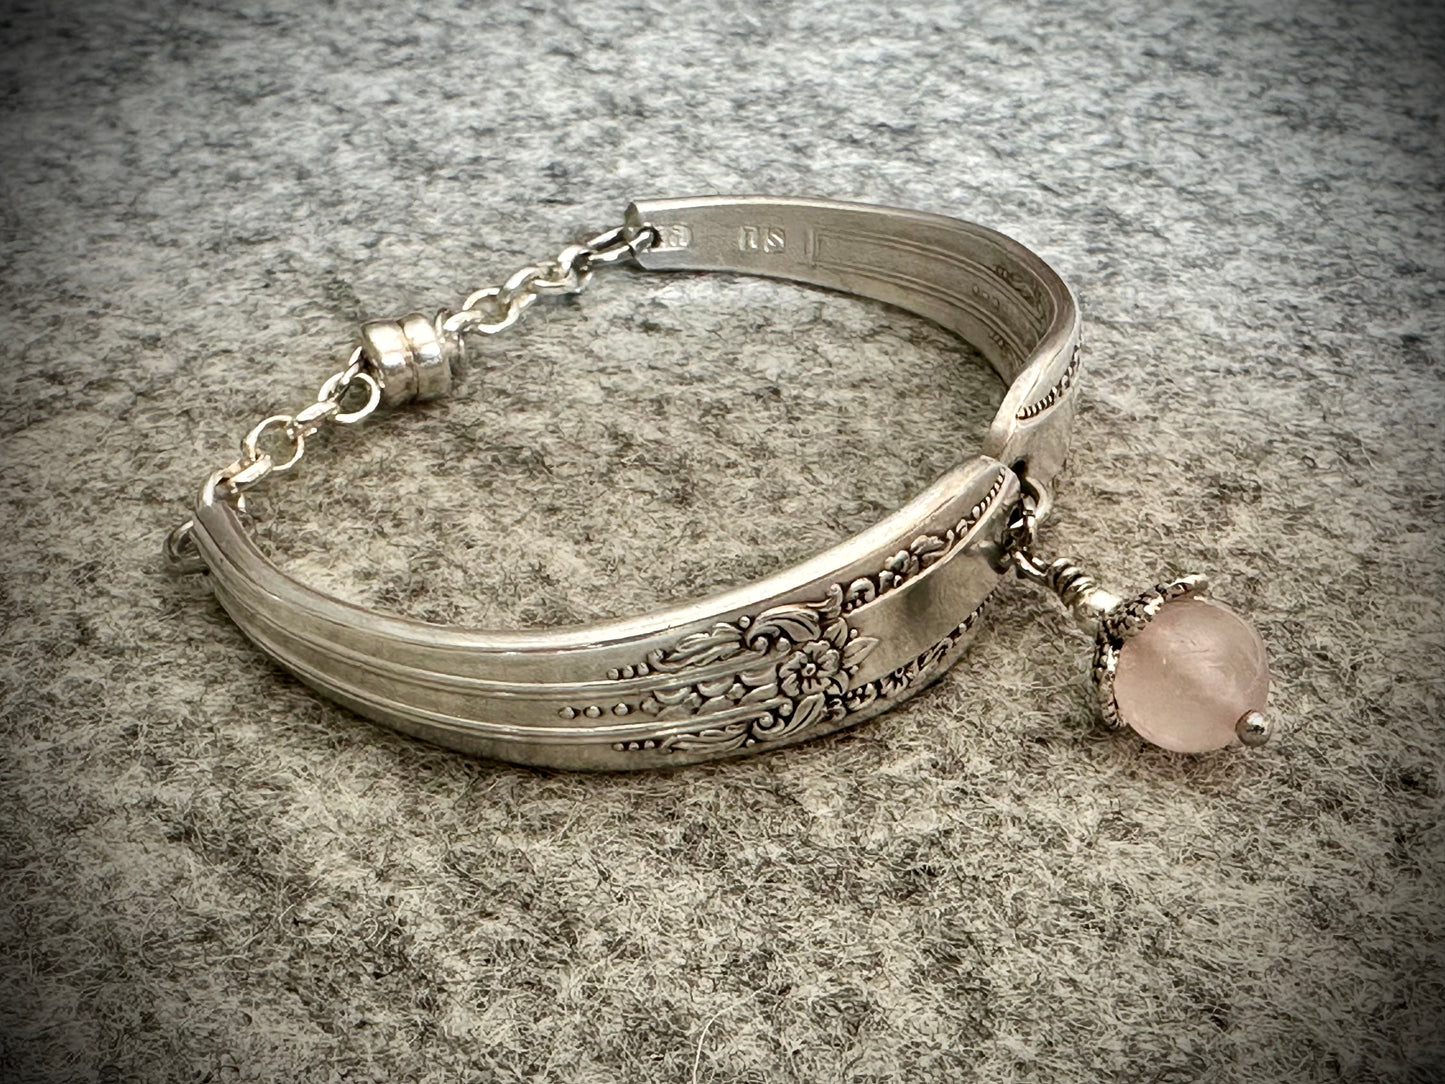 Vintage Reflection Silver-Plated Bracelet with Center Rose Quartz Charm